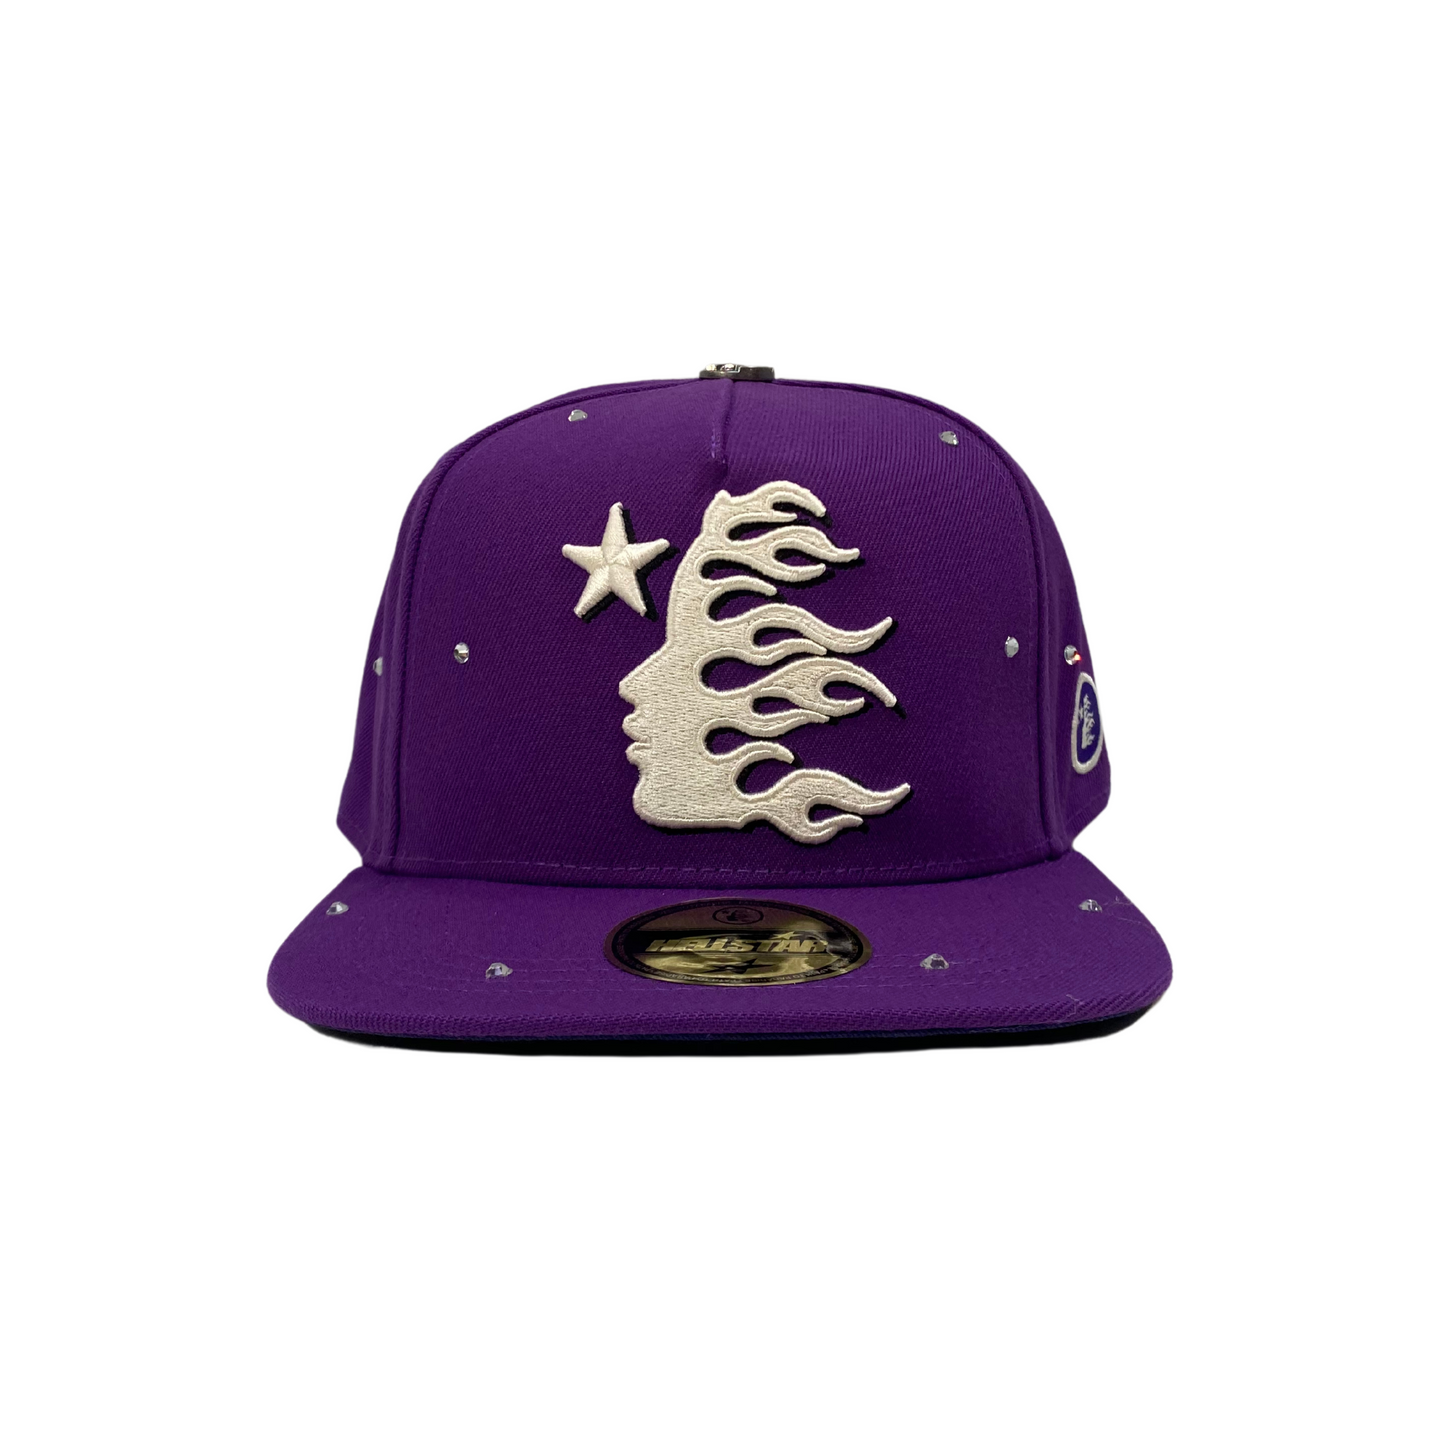 Purple Fitted Rhinestone Hat